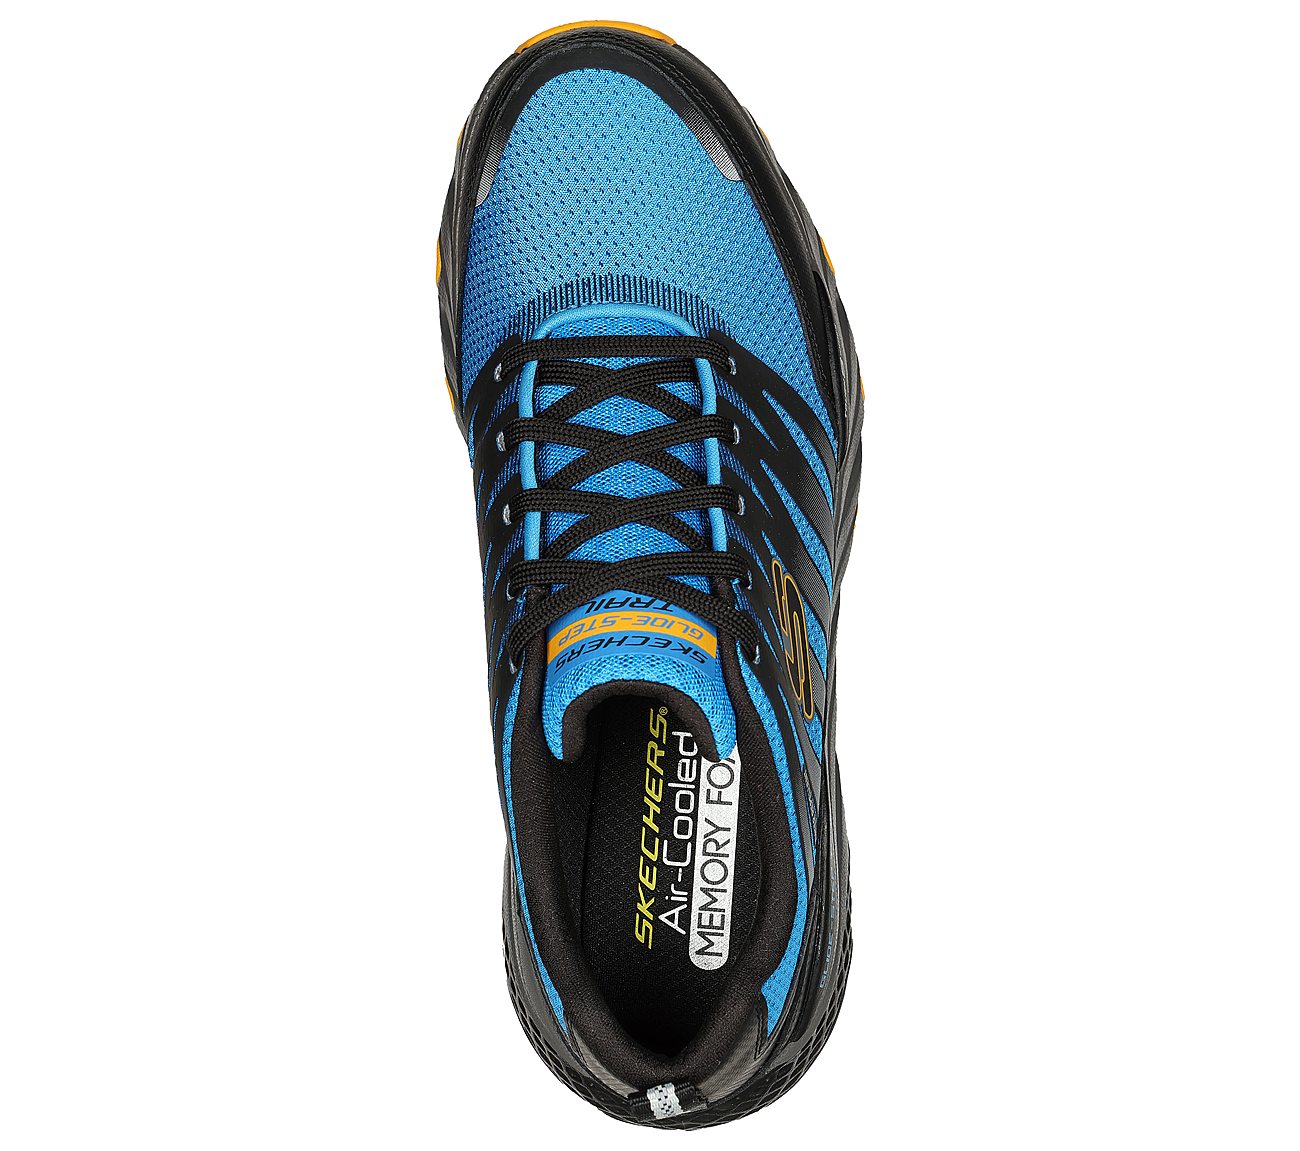 GLIDE-STEP TRAIL, BLUE/BLACK Footwear Top View